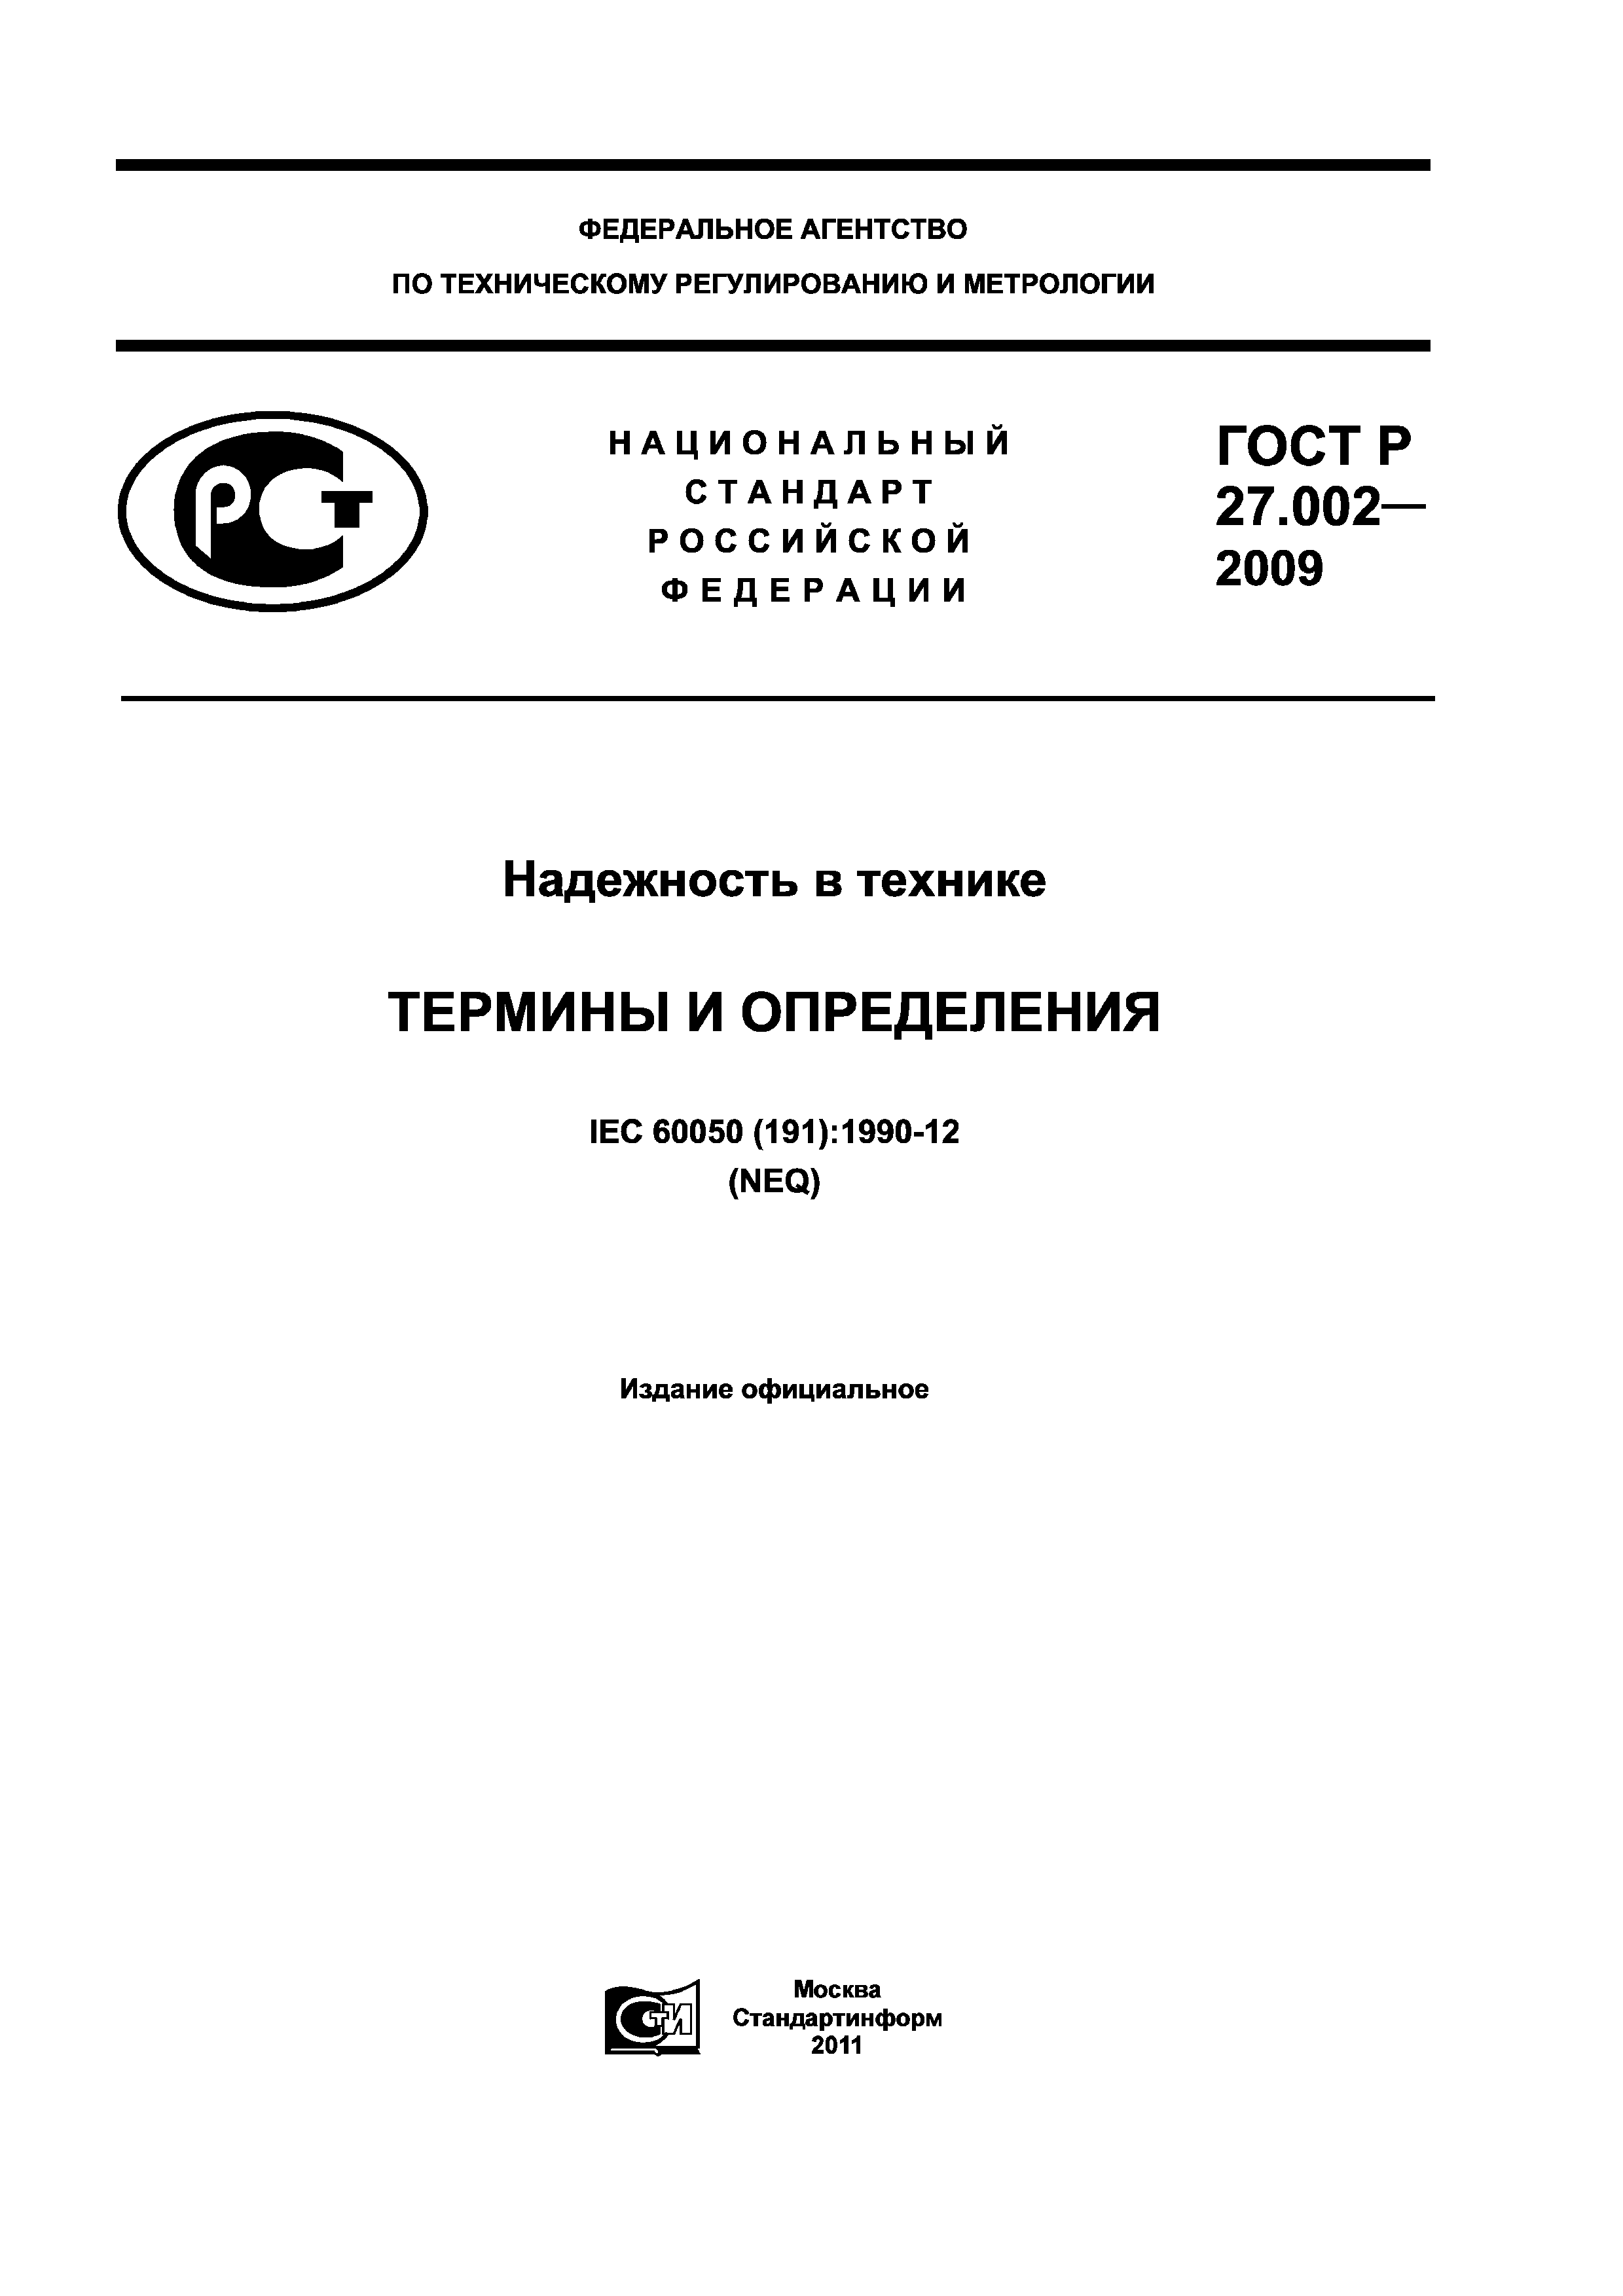 ГОСТ Р 27.002-2009